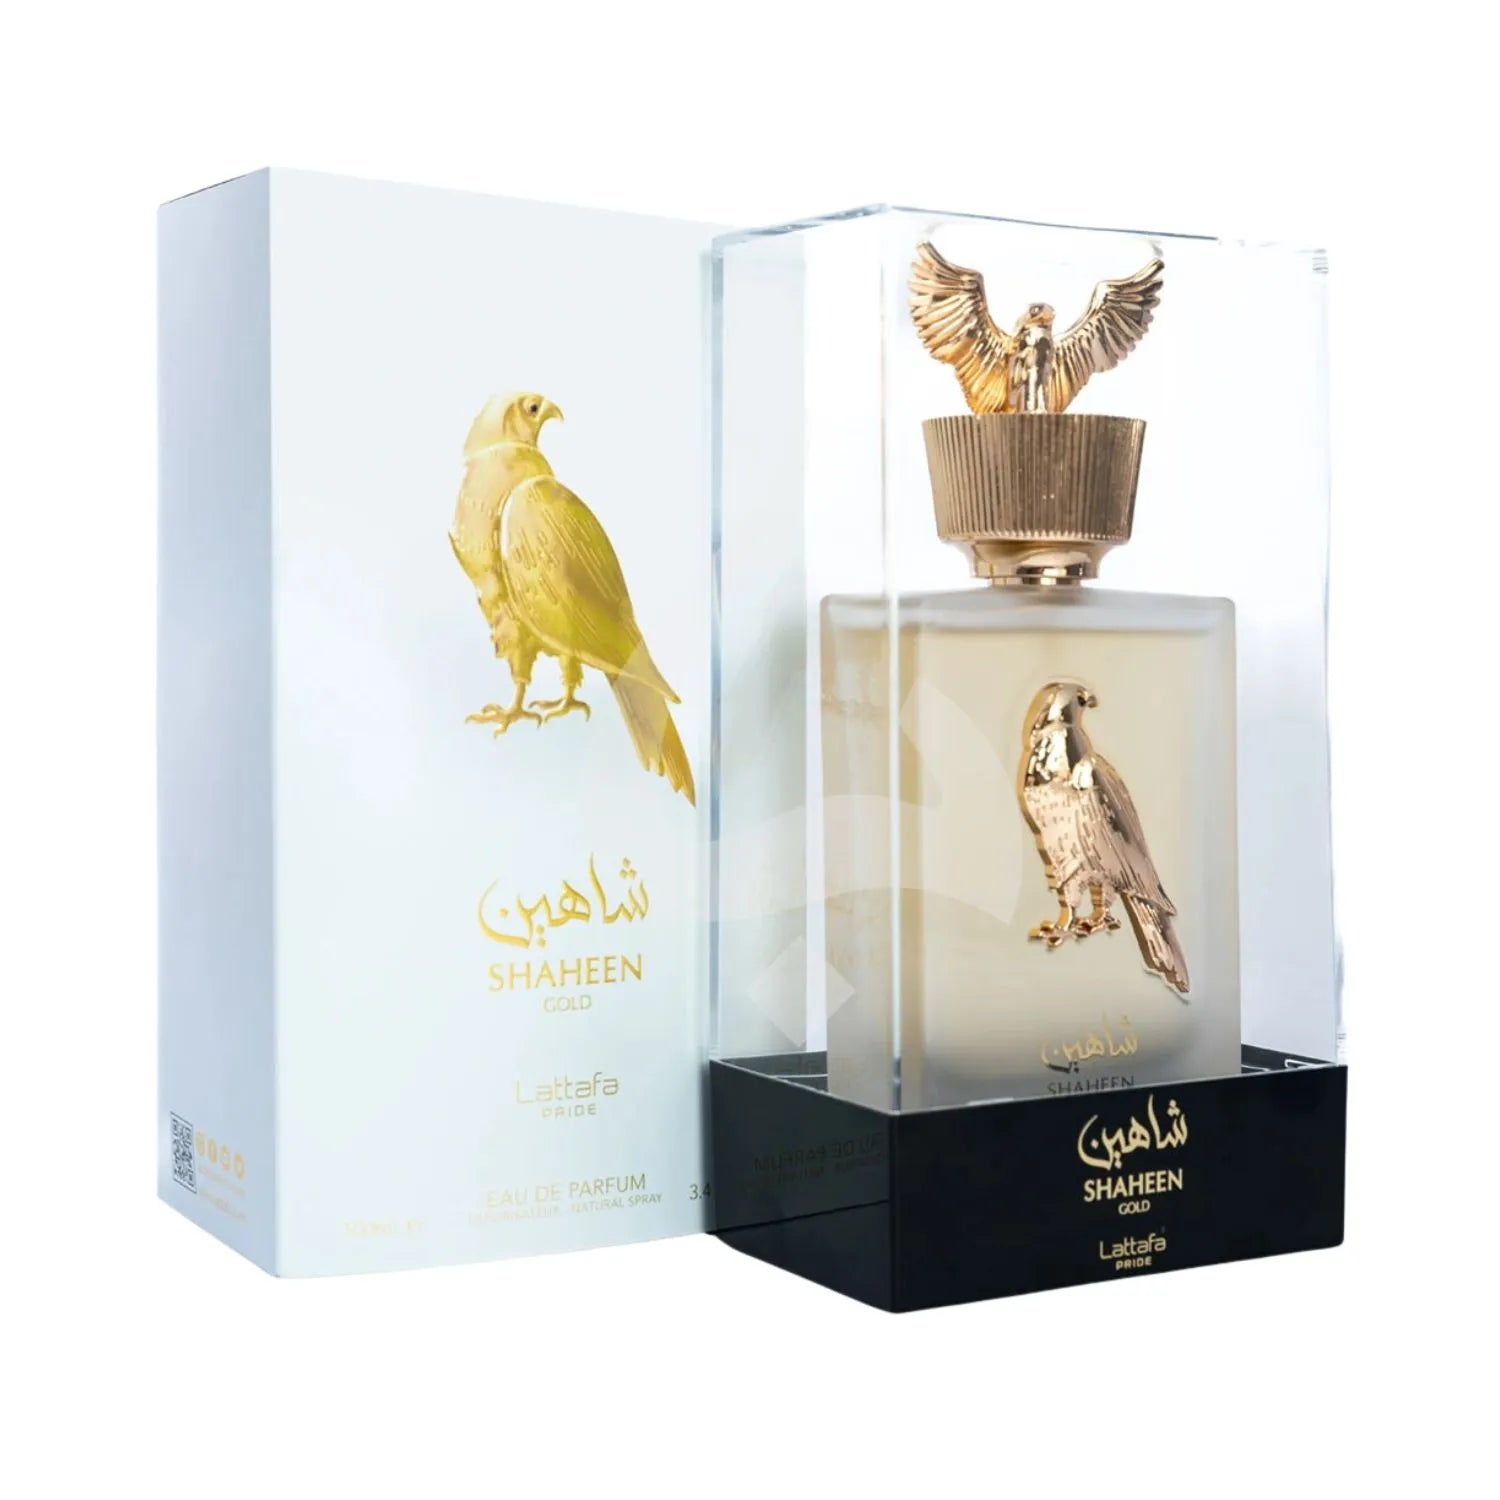 Shaheen Gold Perfume Lattafa Box